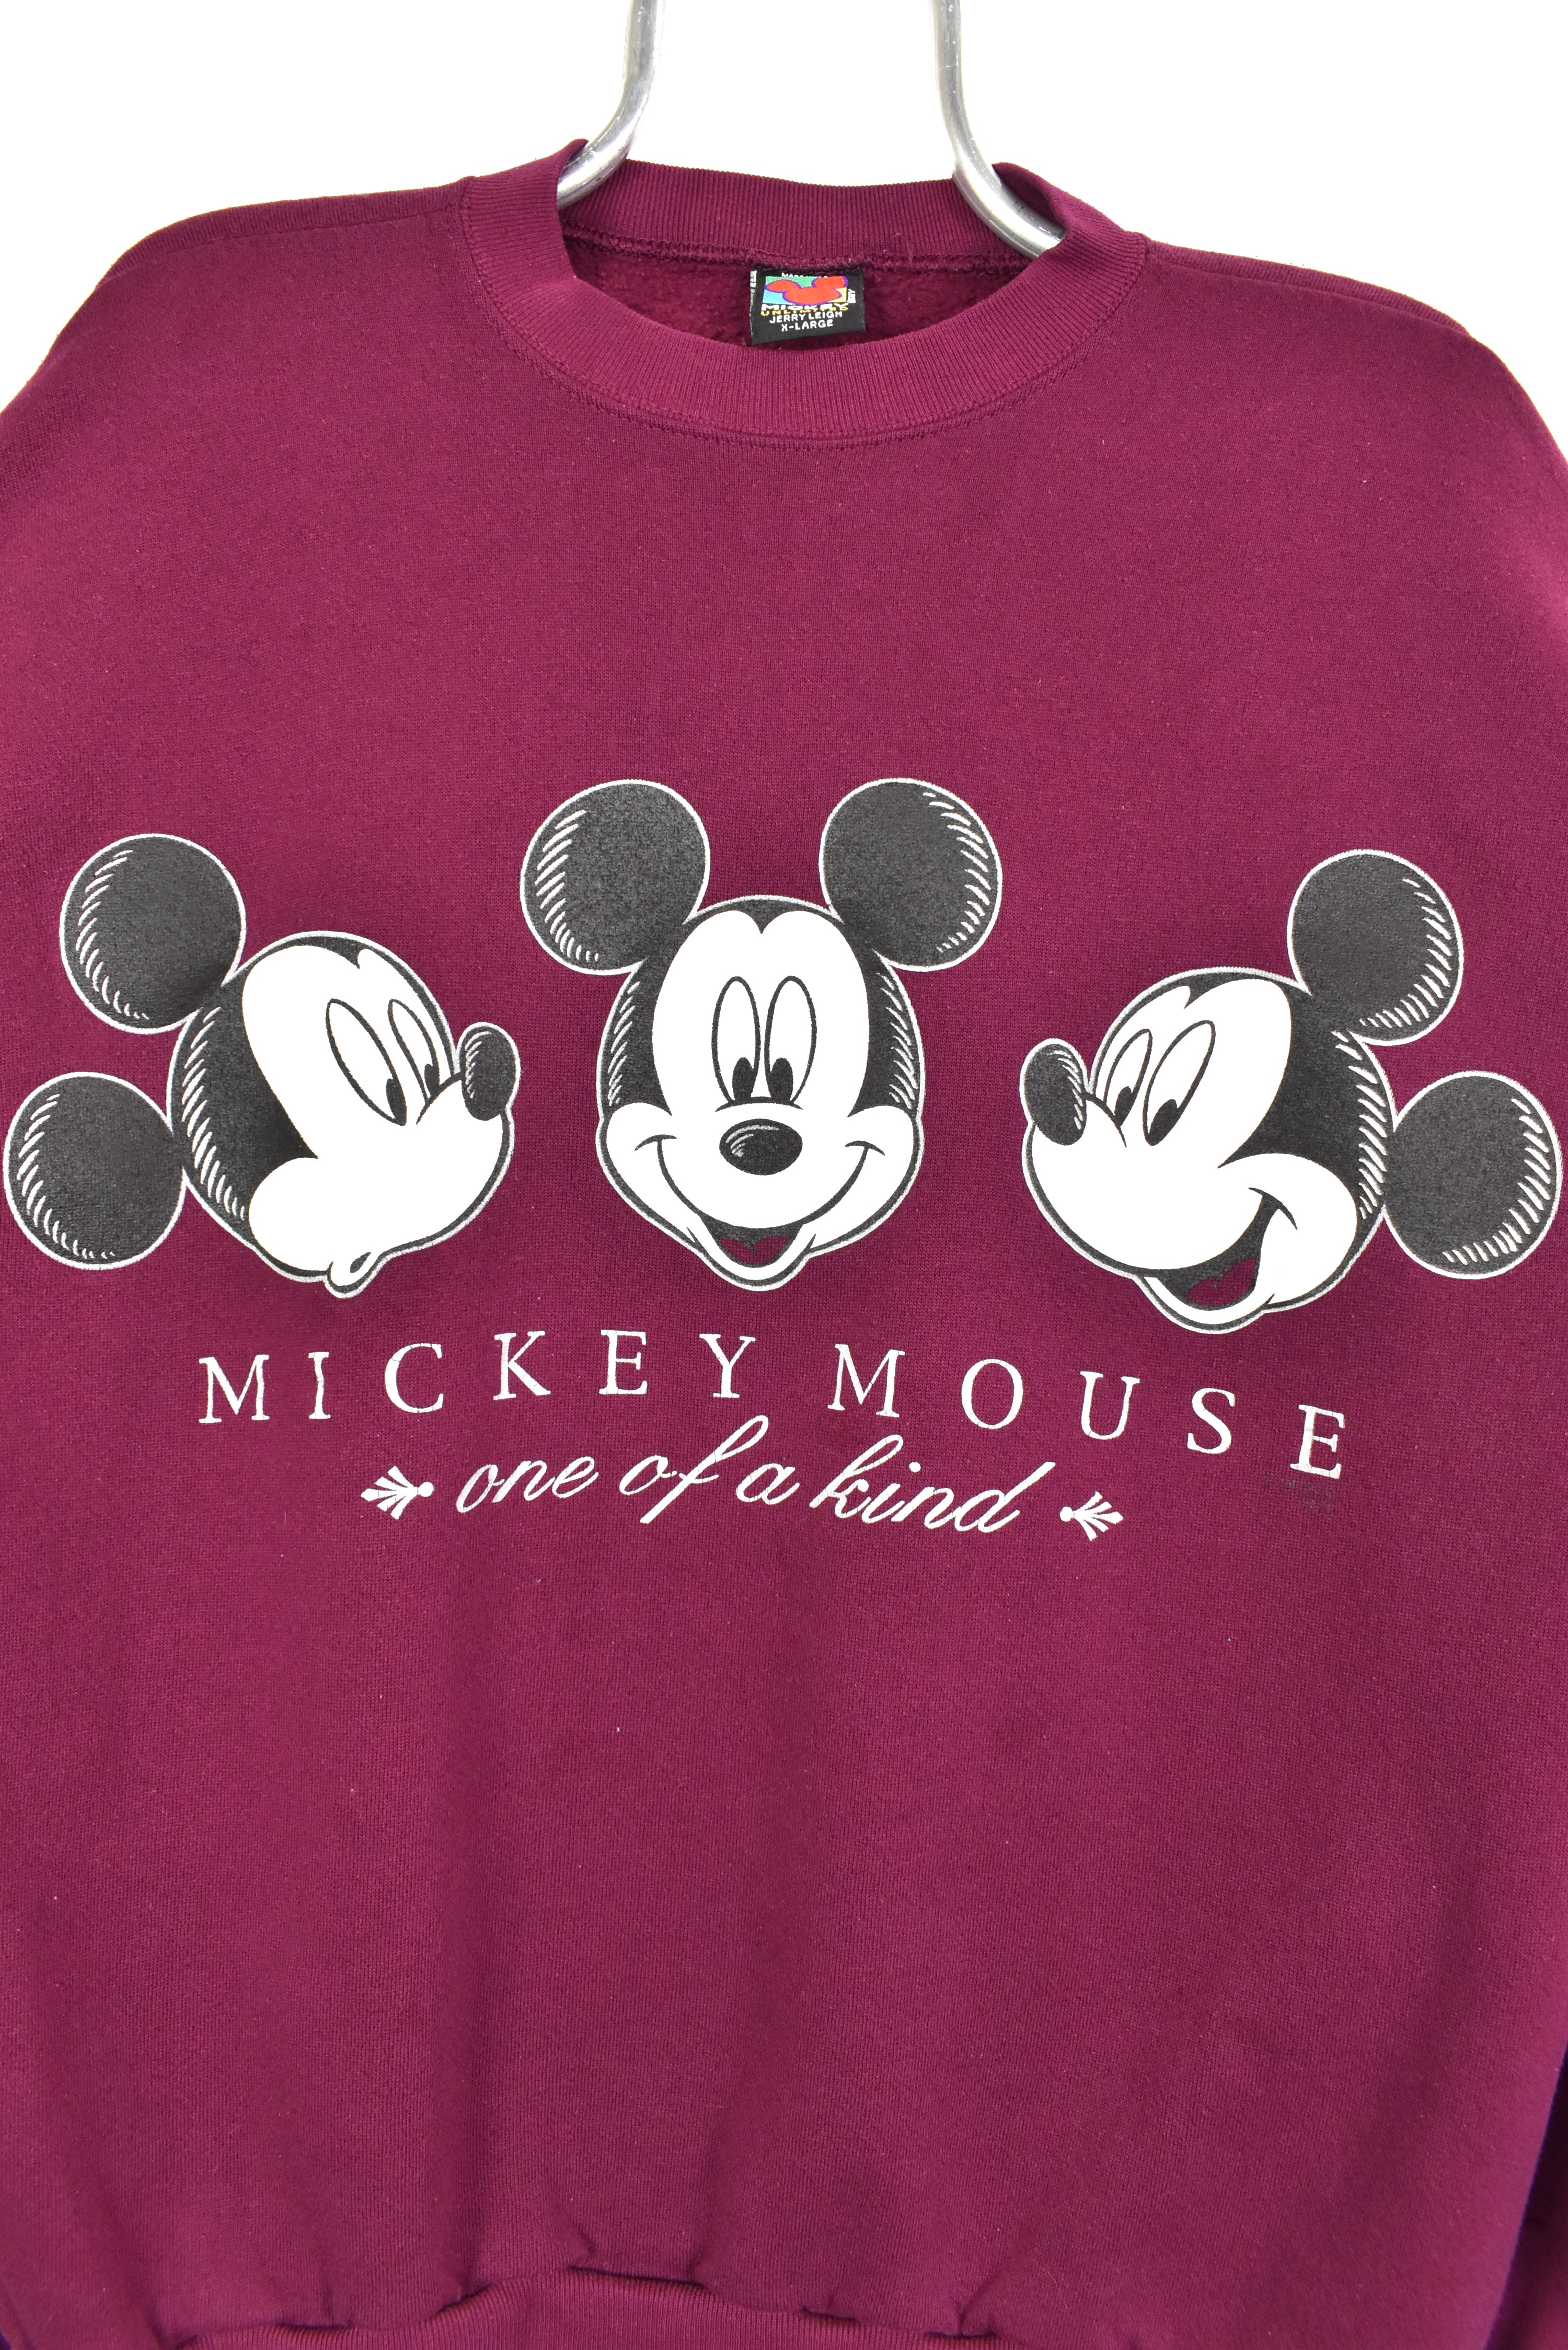 Vintage Disney sweatshirt, Mickey Mouse graphic crewneck - large, burgundy DISNEY / CARTOON